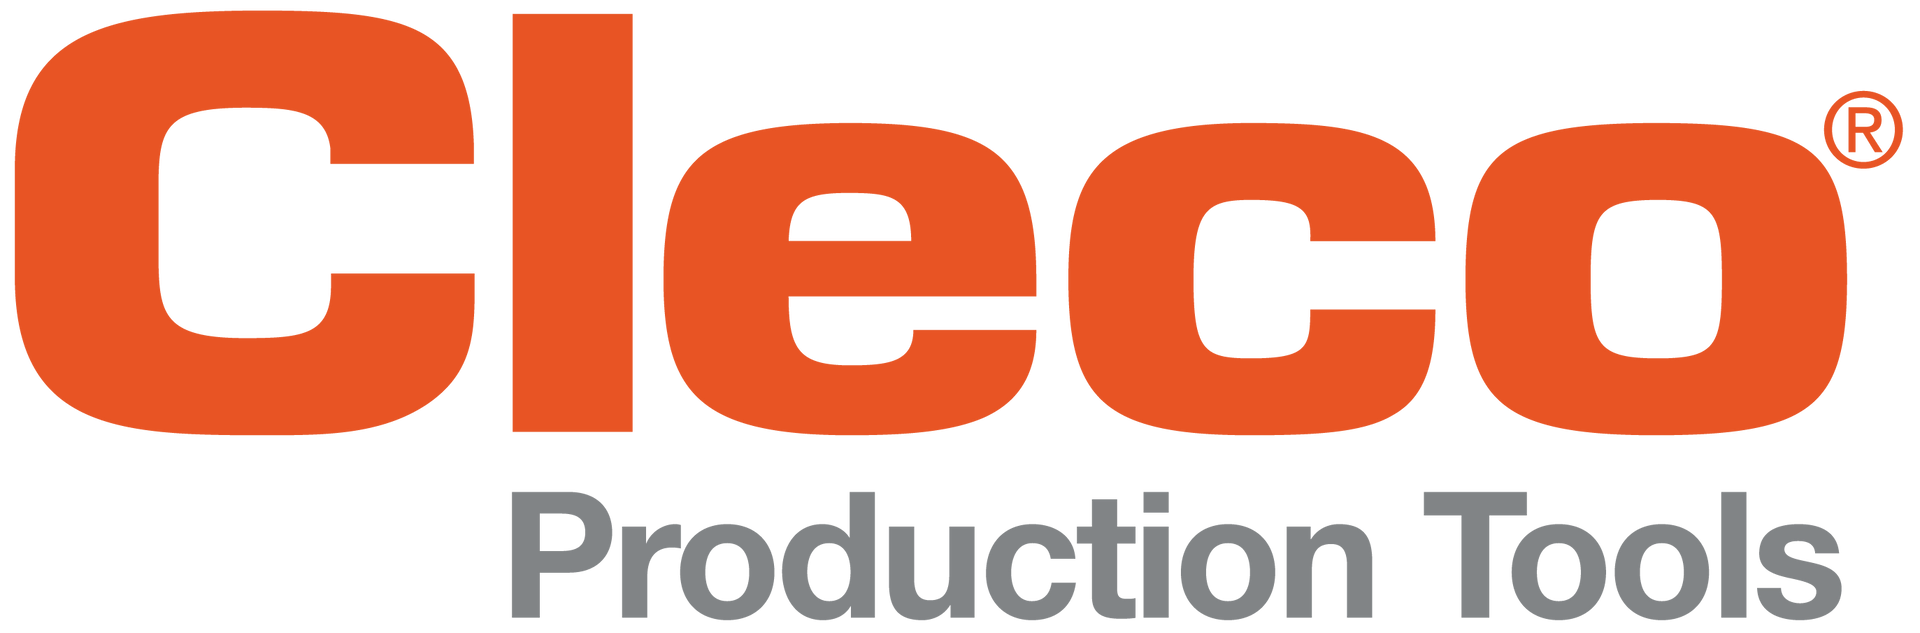 Cleco Production Tools logo